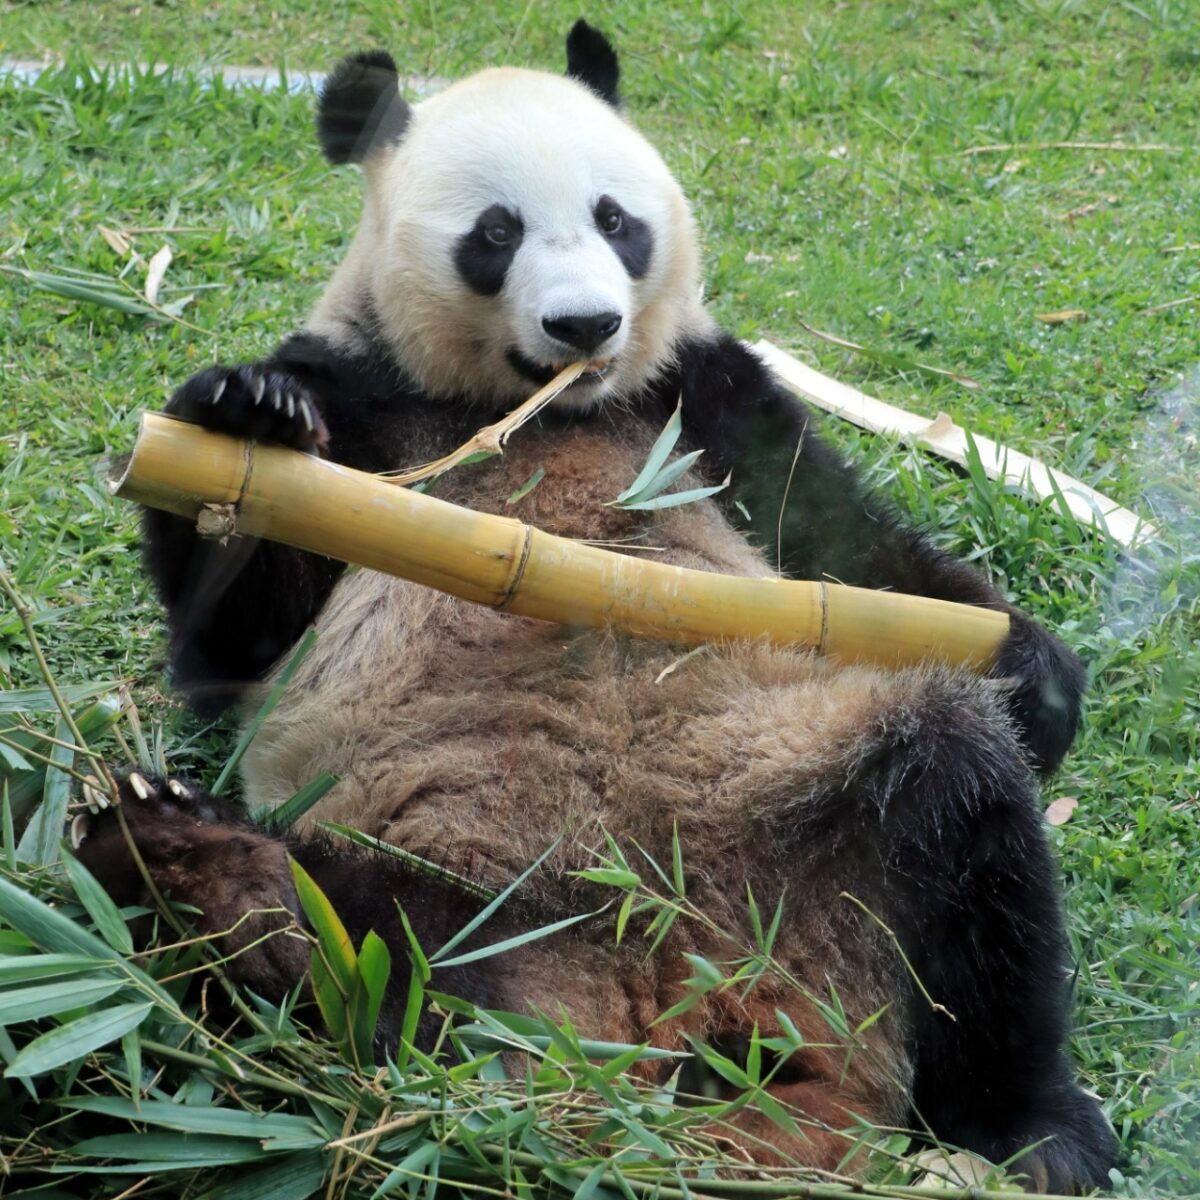 National Panda Day: Celebrating the Cute and Endangered Giant Panda